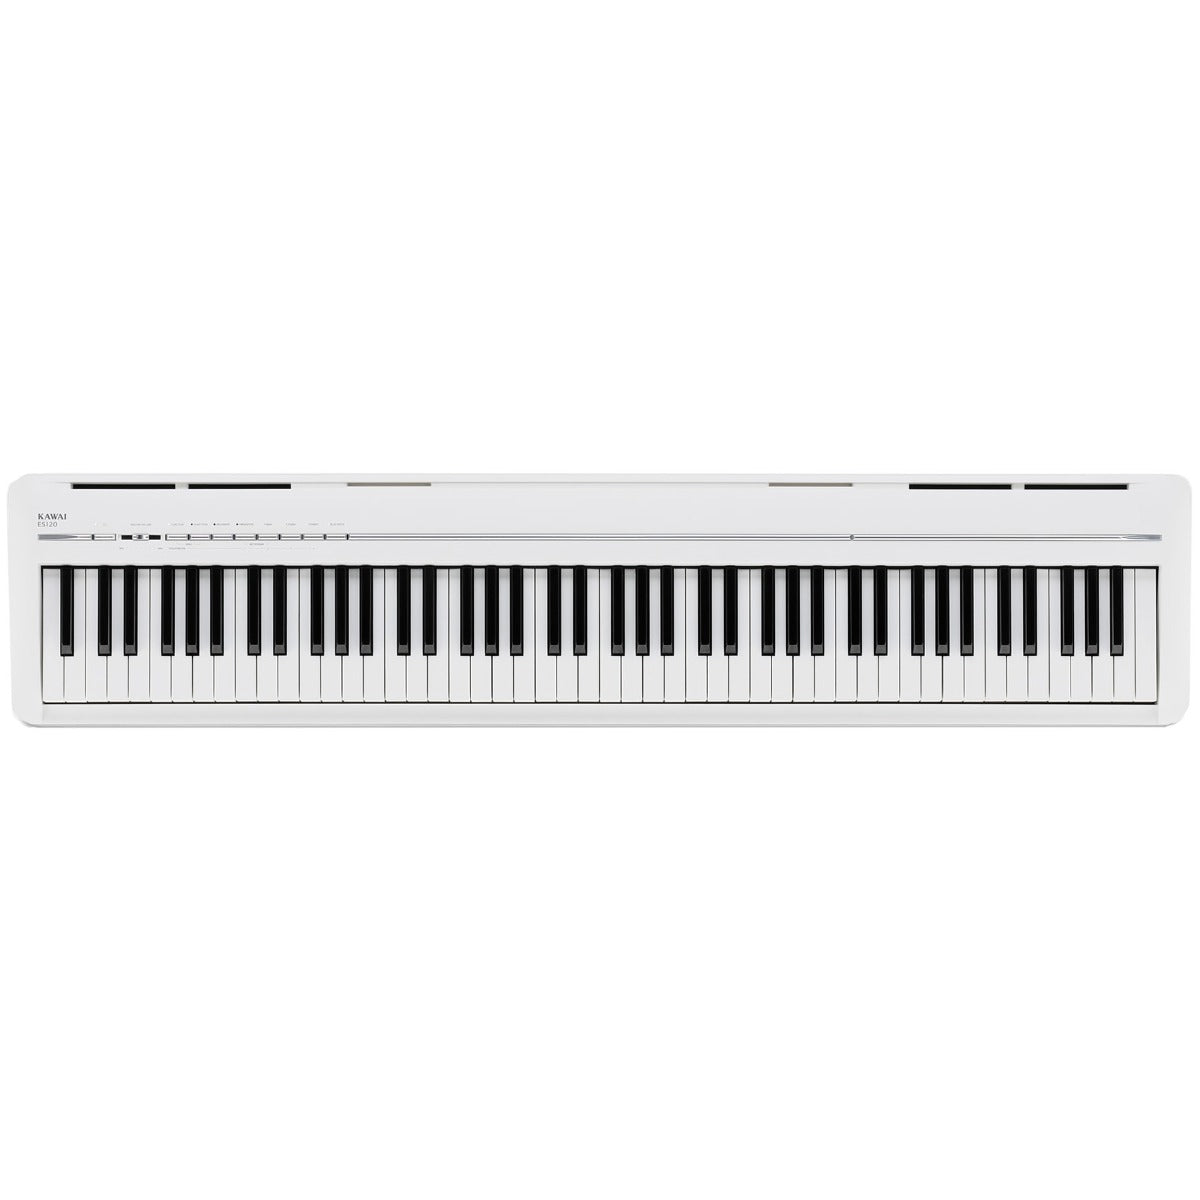 Kawai ES120 Portable Digital Piano - White, View 1